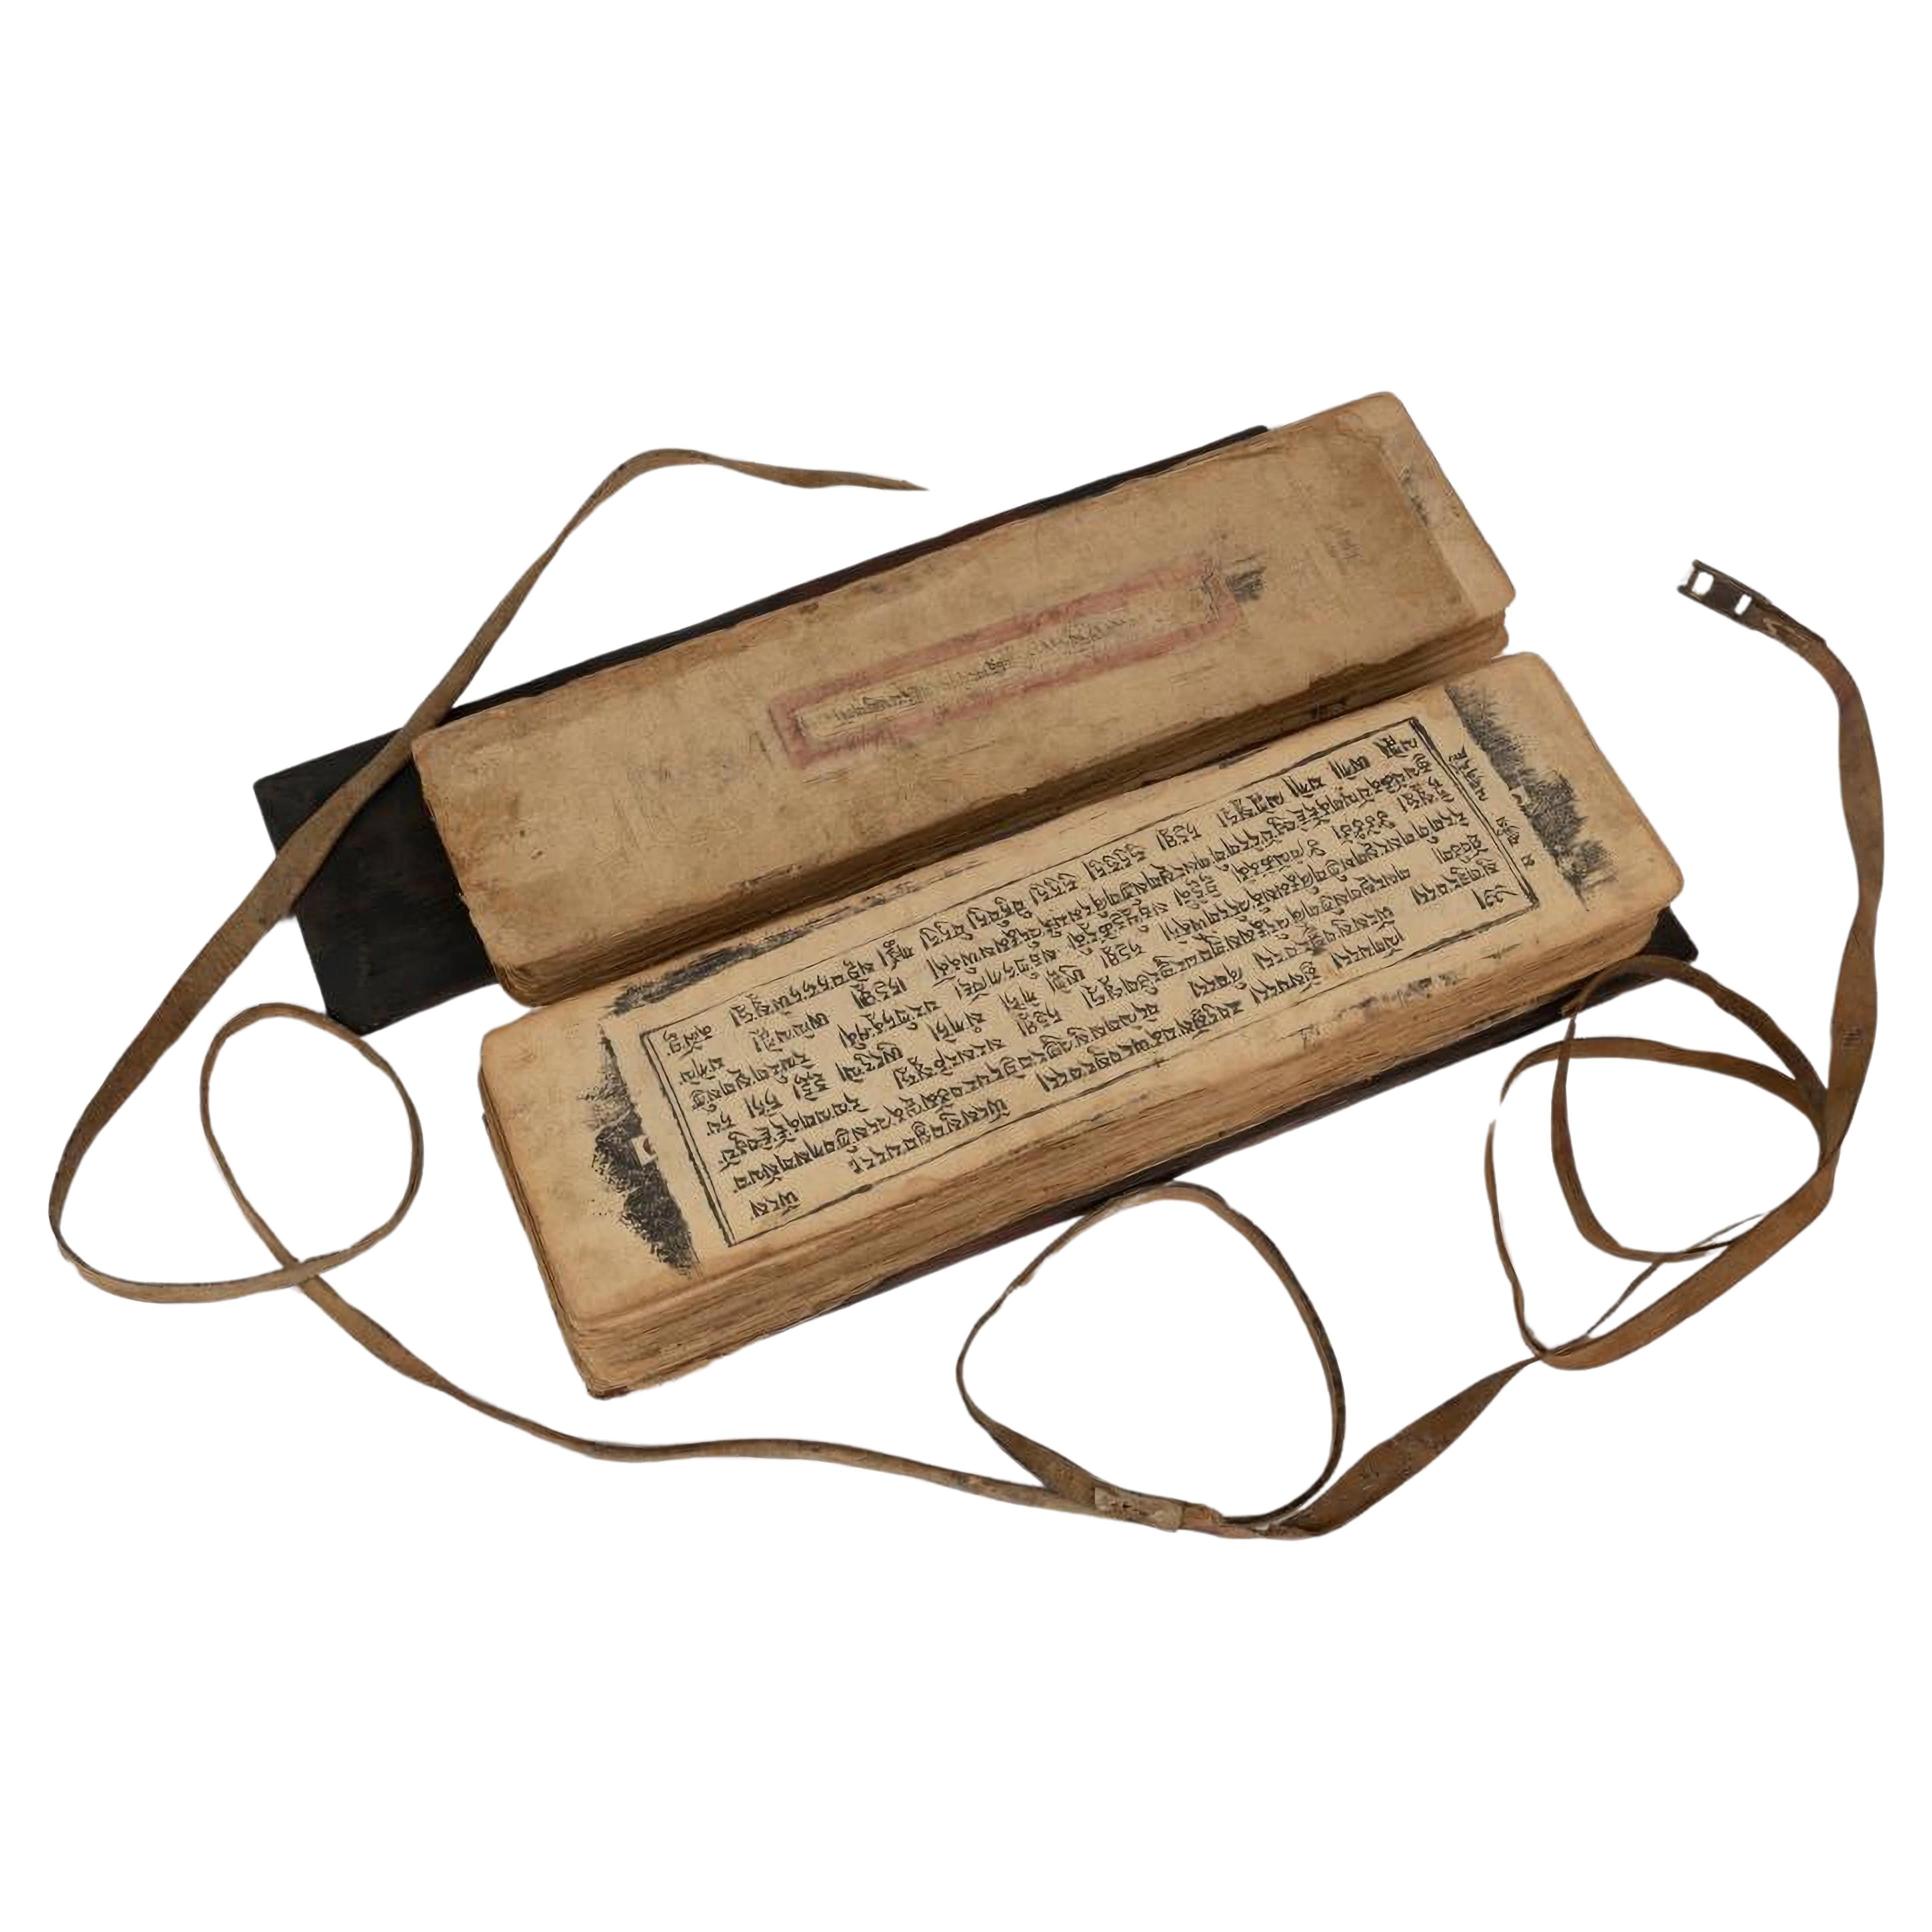 A Tibetan Prayer Book In Wooden Casing, 19th Century